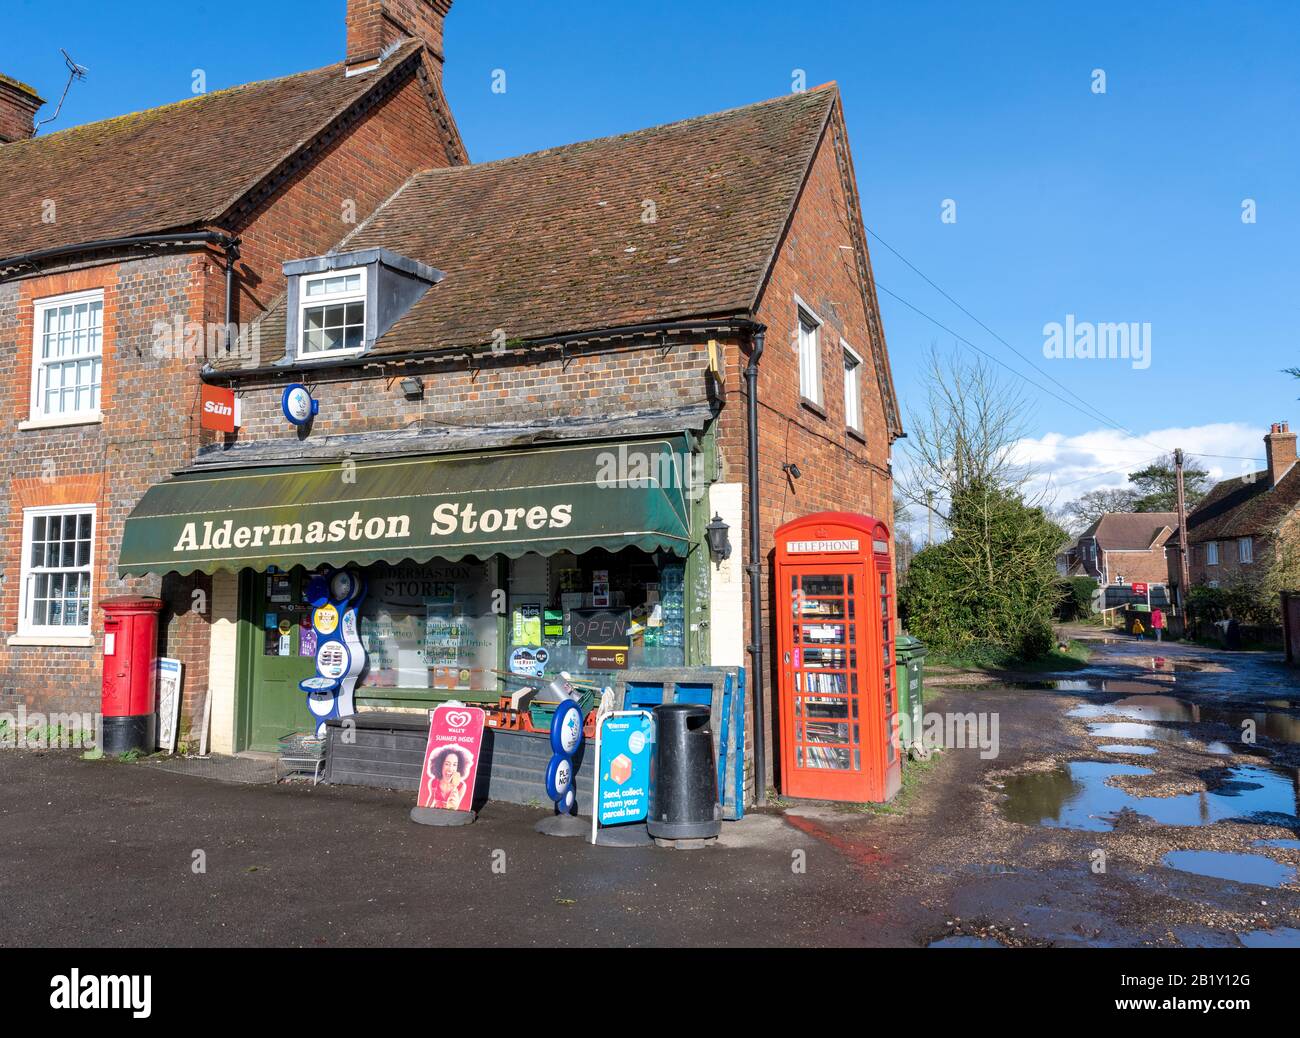 Aldermaston Stores the village shop, Aldermaston, Berkshire, England, UK Stock Photo